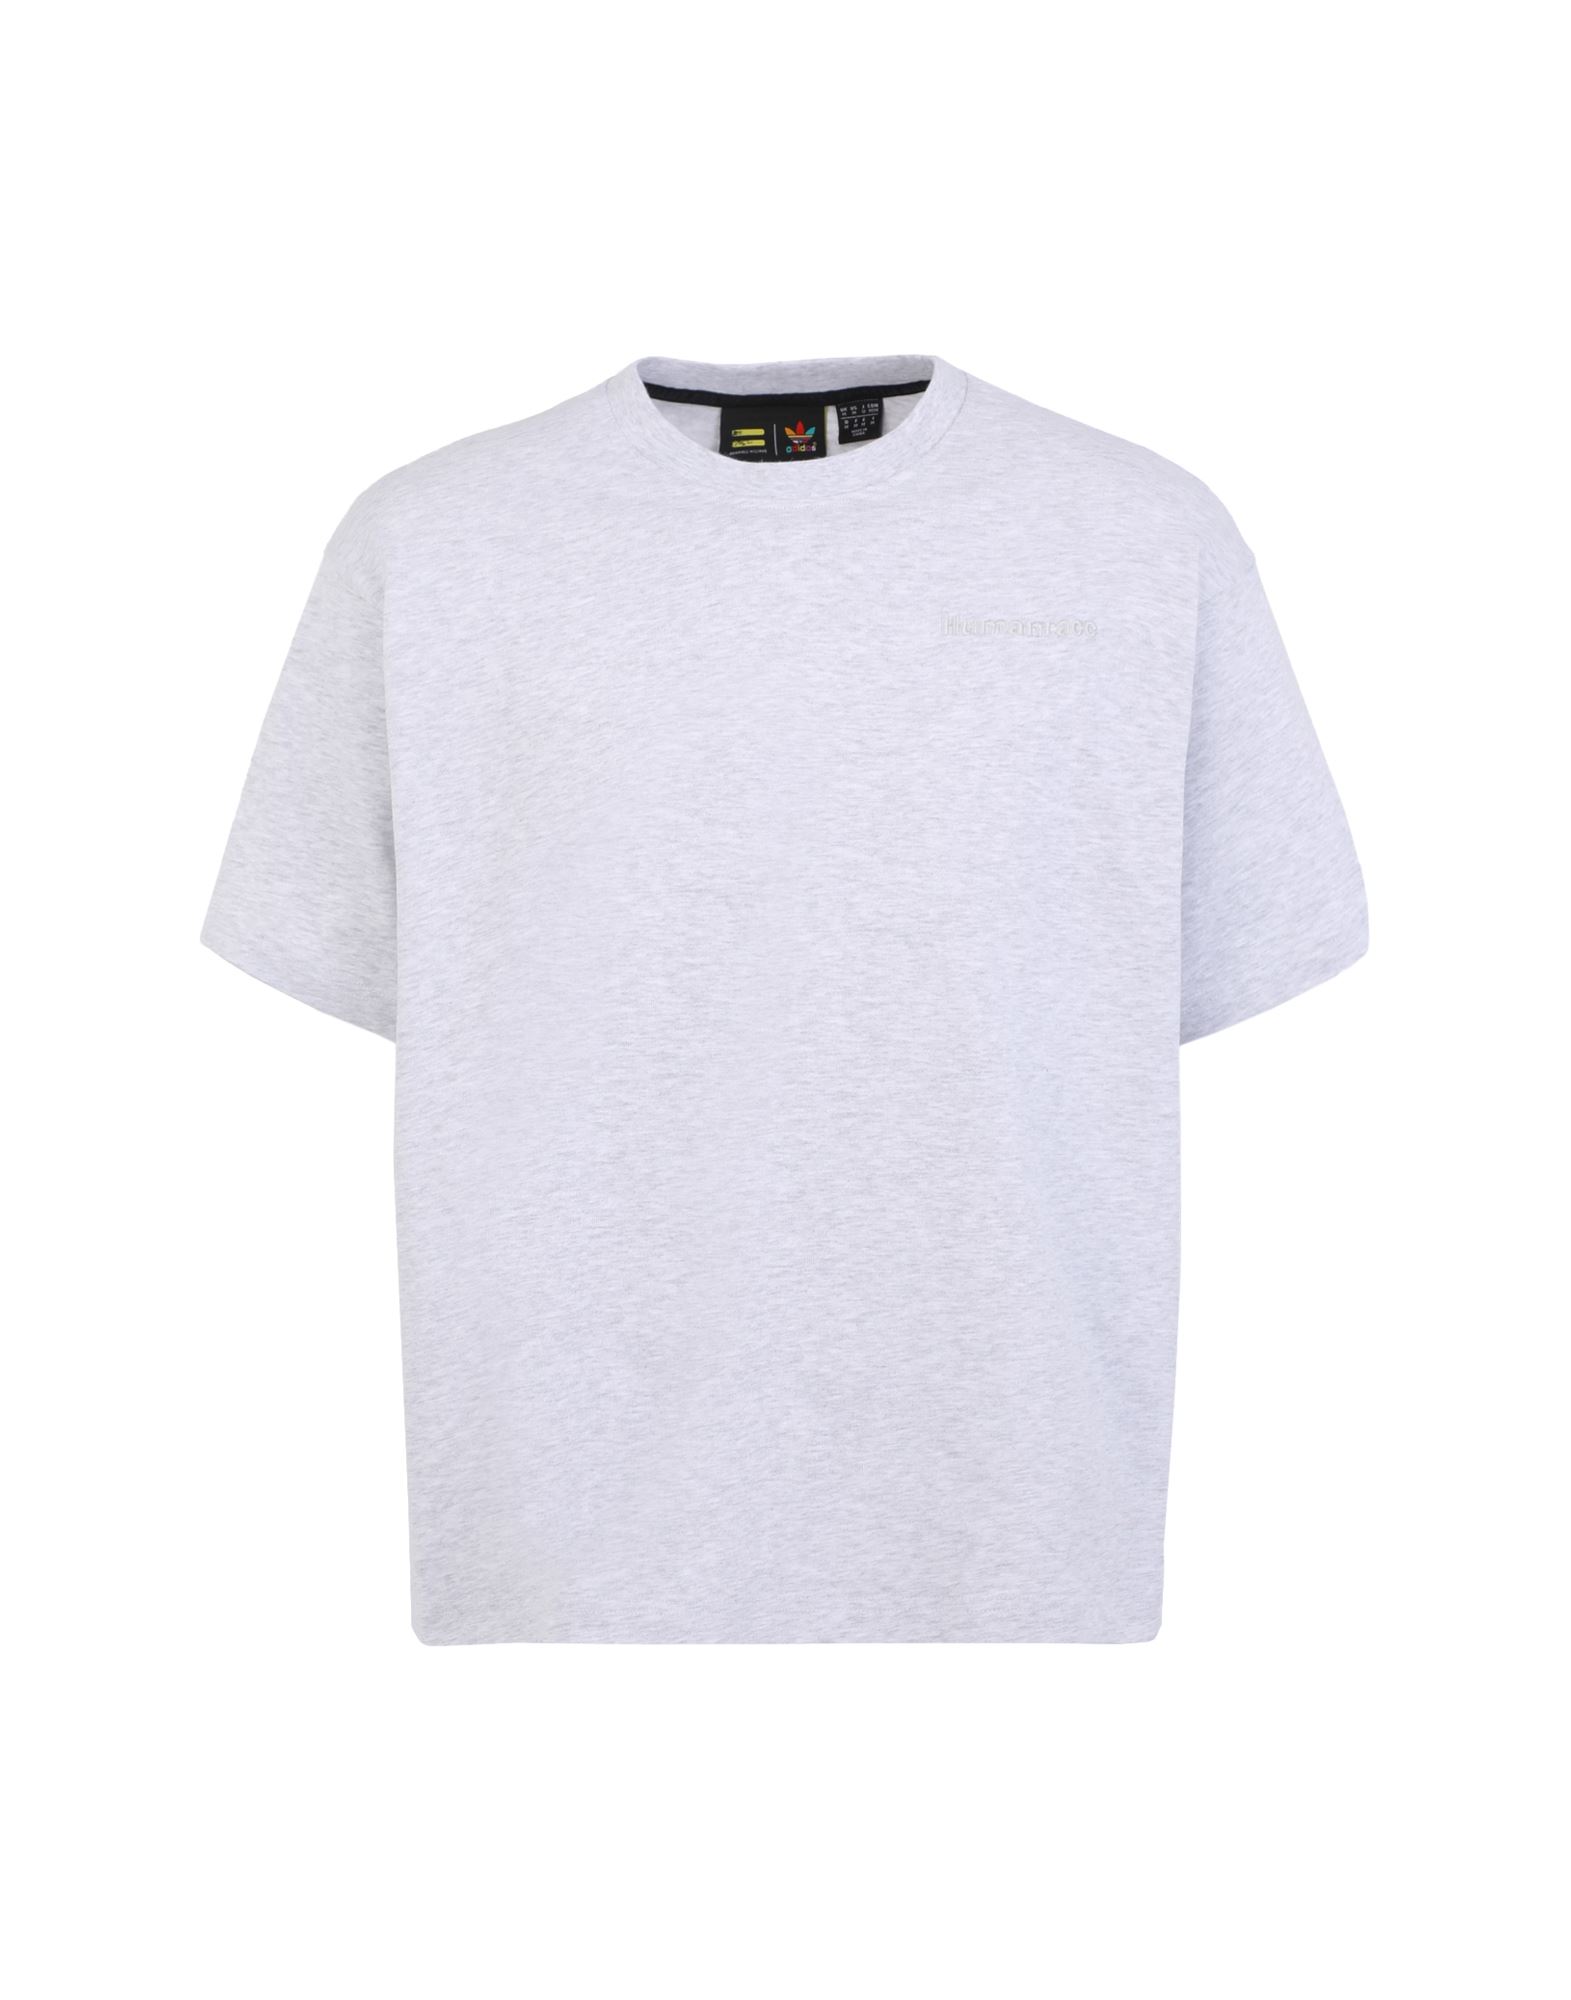 Adidas Originals By Pharrell Williams T-shirts In Grey